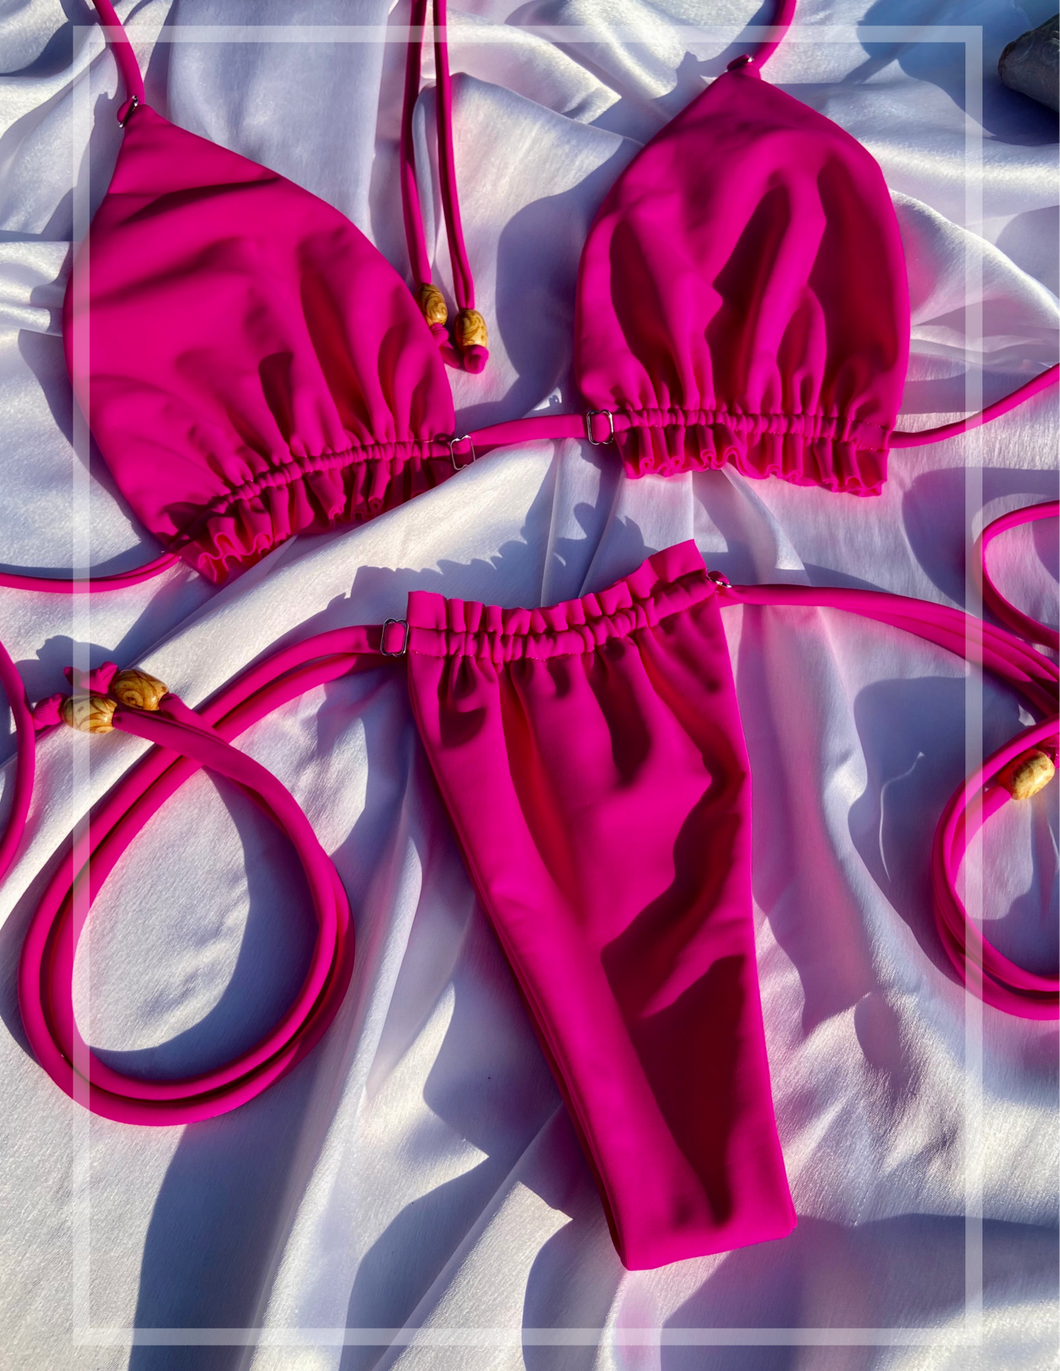 Pink Tie String Bikini | Swimwear